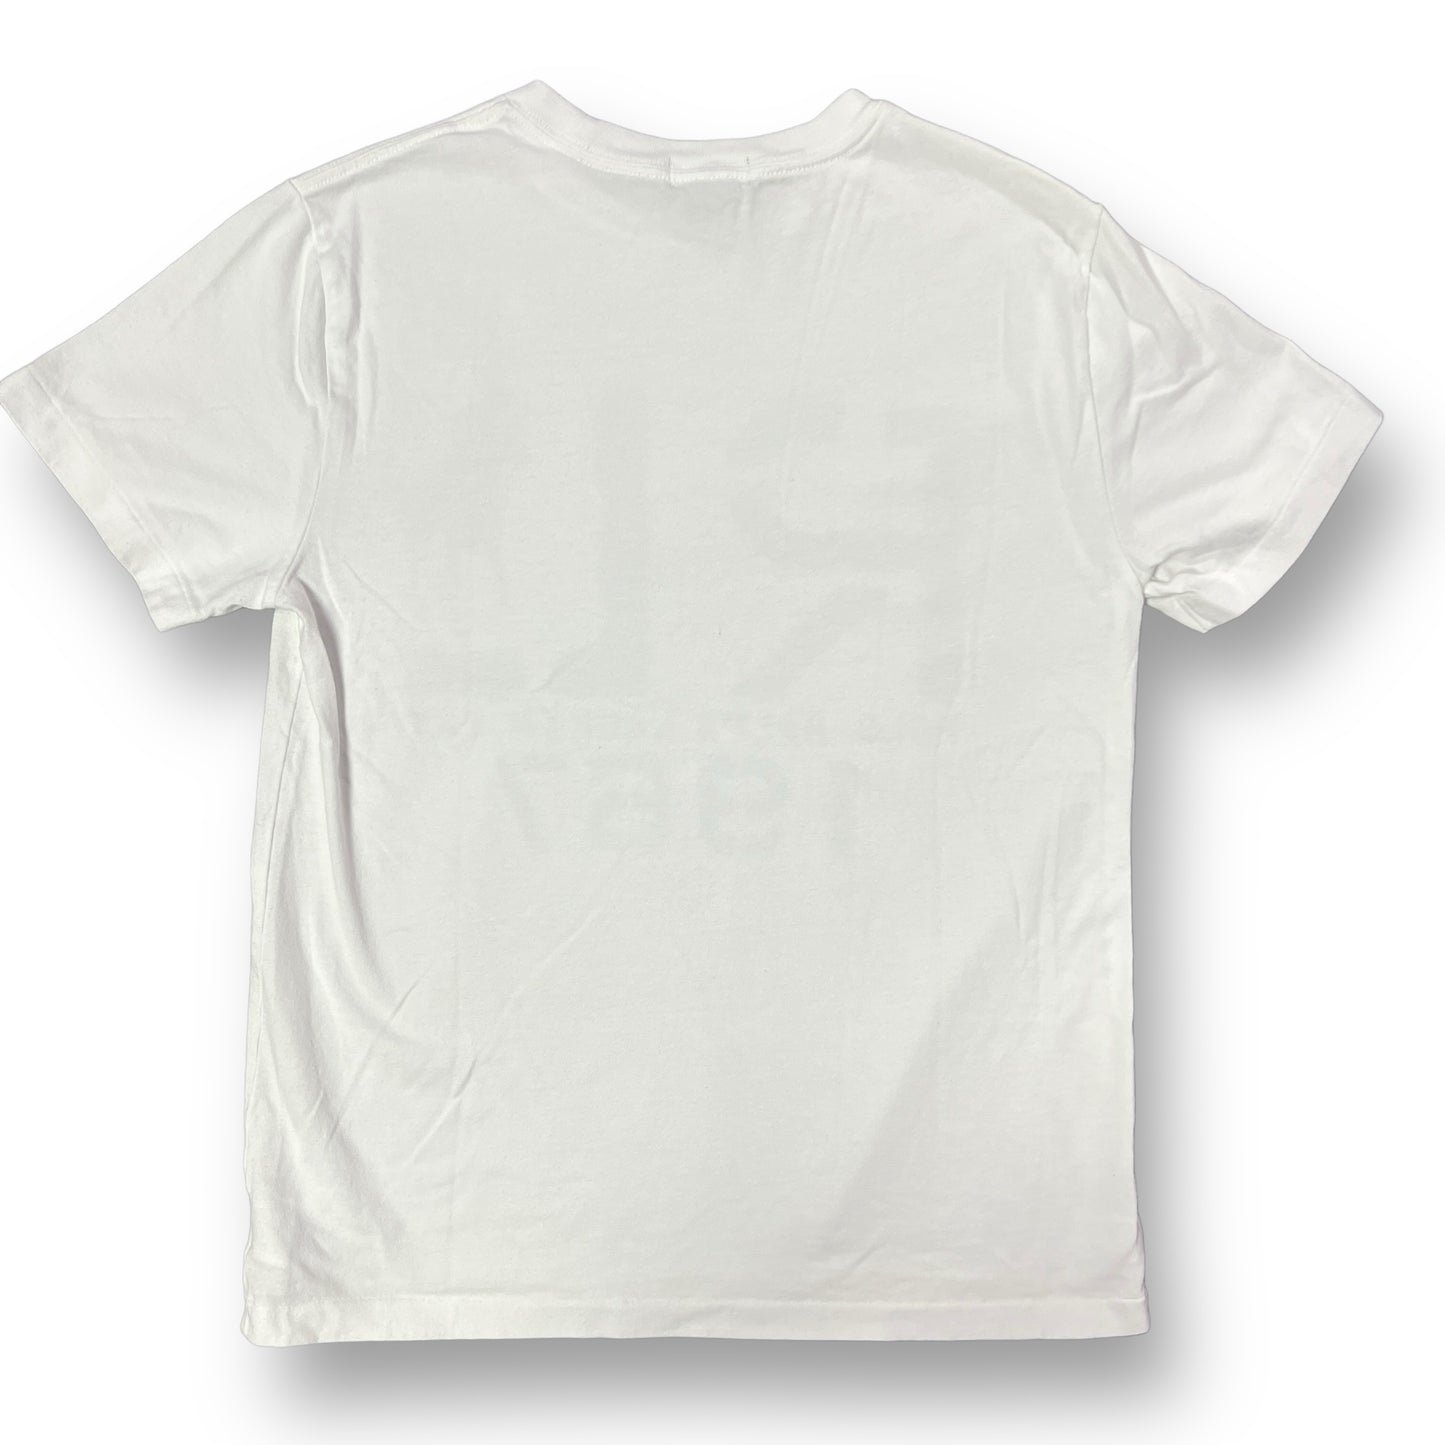 Boys Polo Size 14/16 White Printed Short Sleeve Shirt